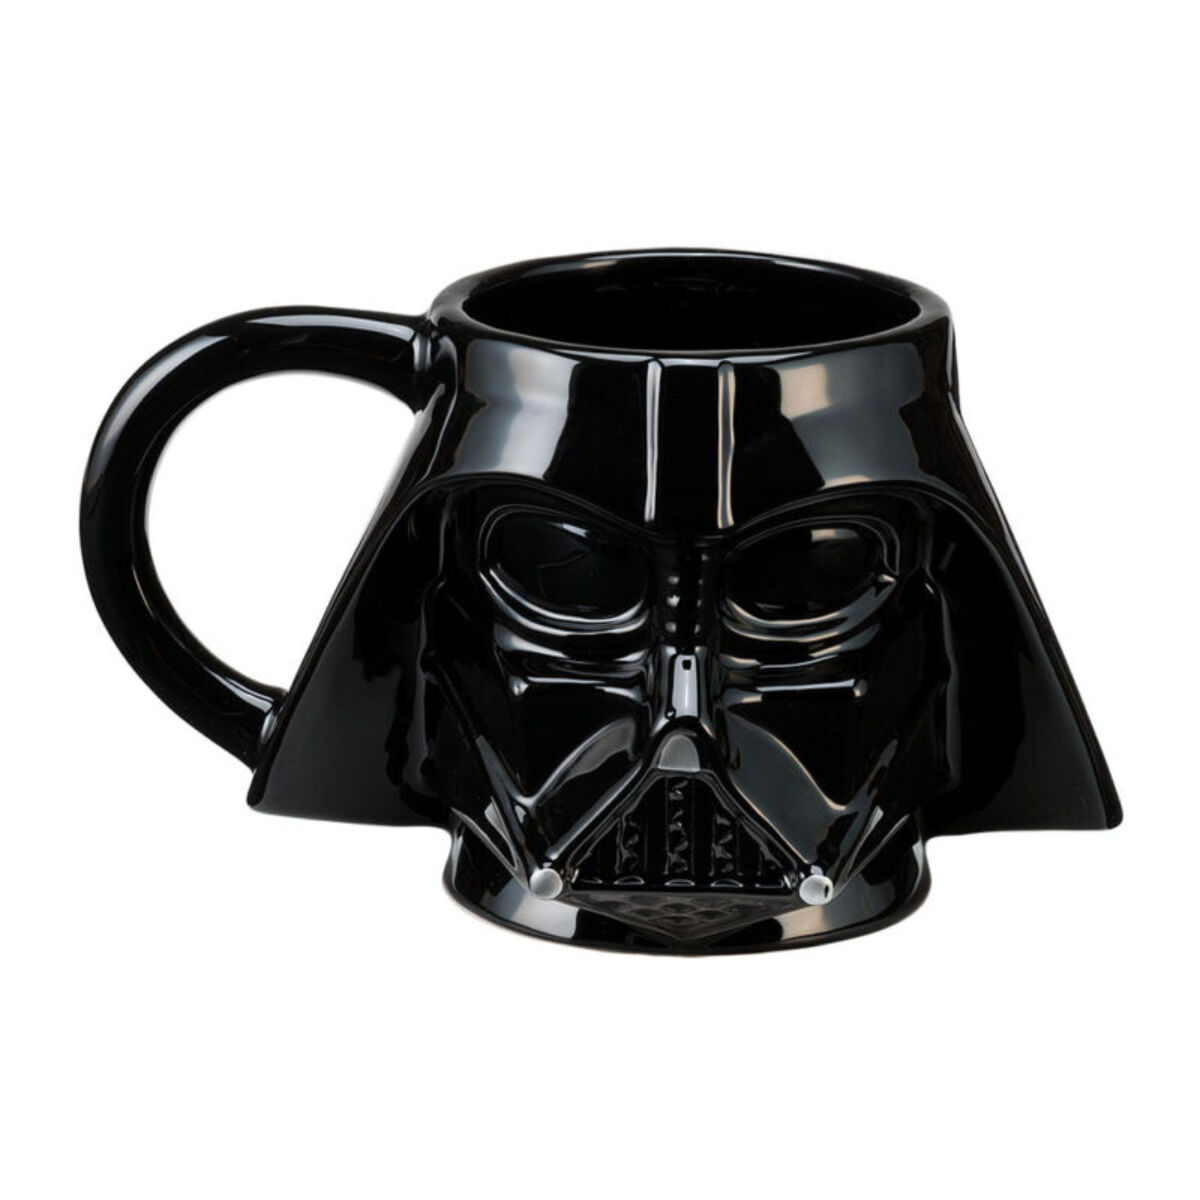 Star Wars A New Hope 20oz Sculpted Ceramic Coffee Cup Mug Luke Skywalker